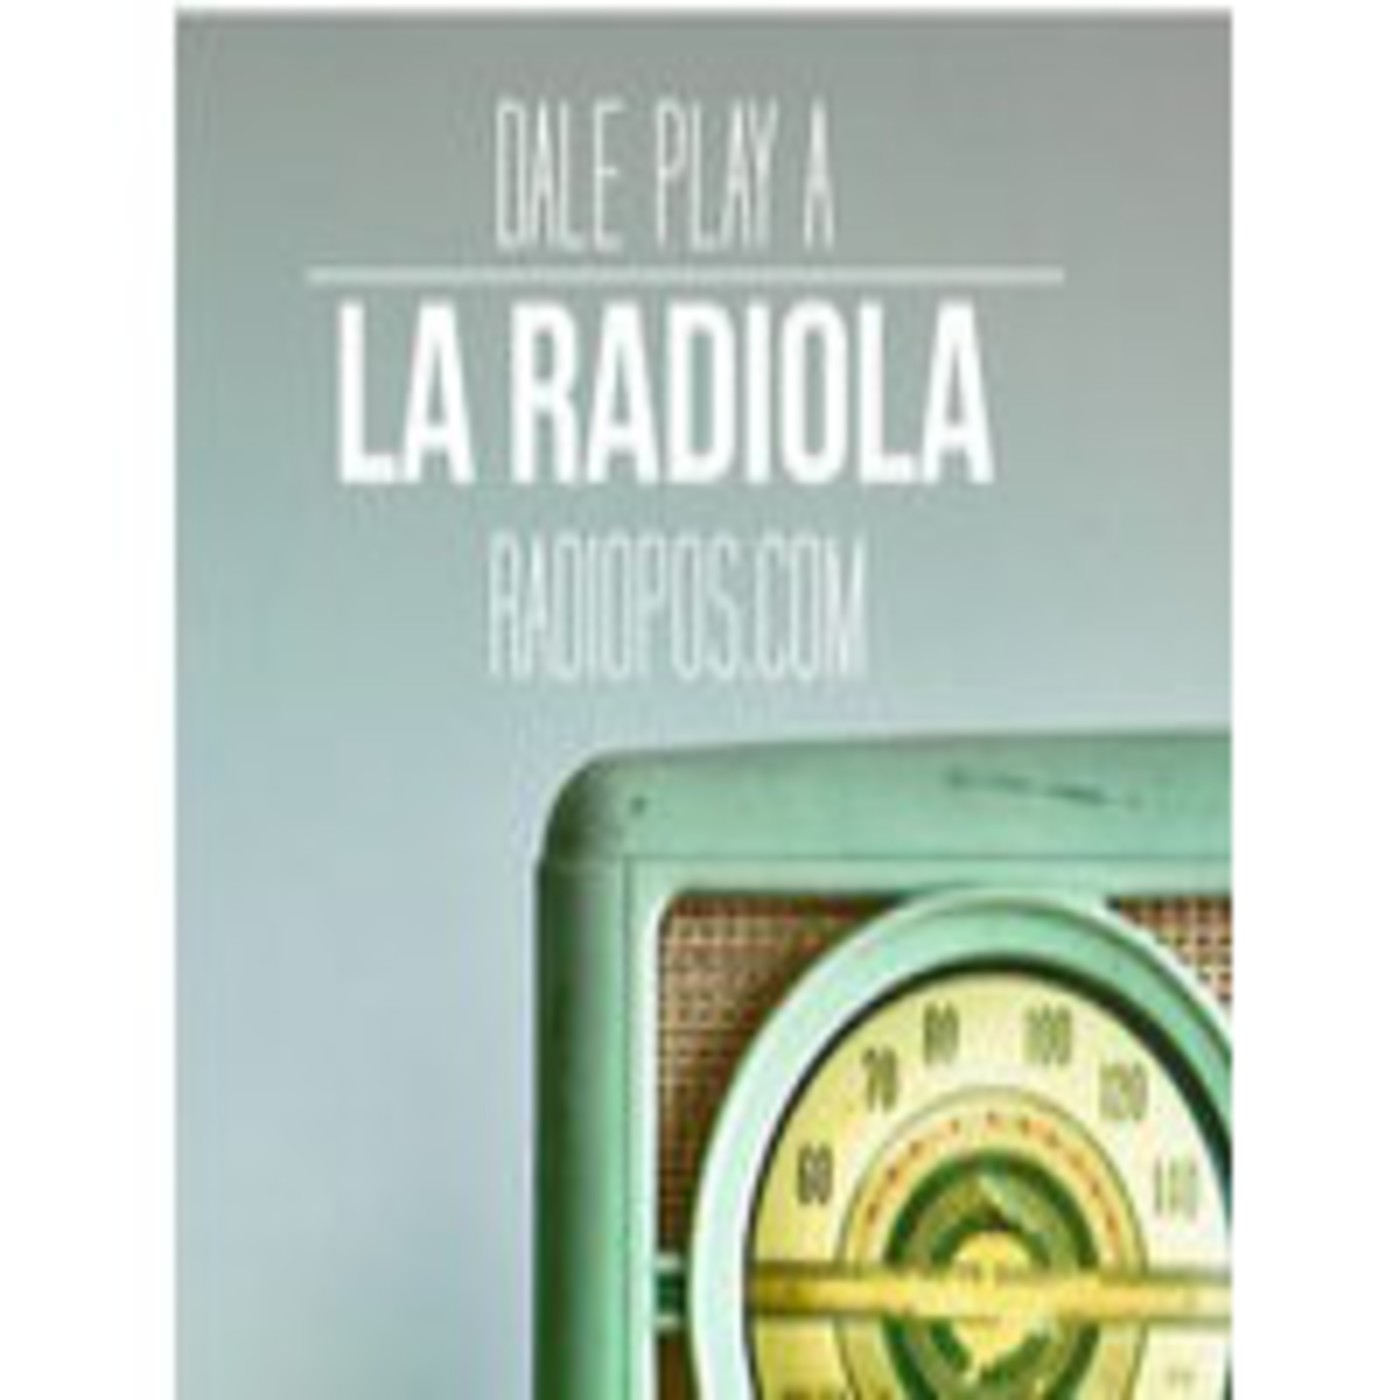 Podcast La radiola